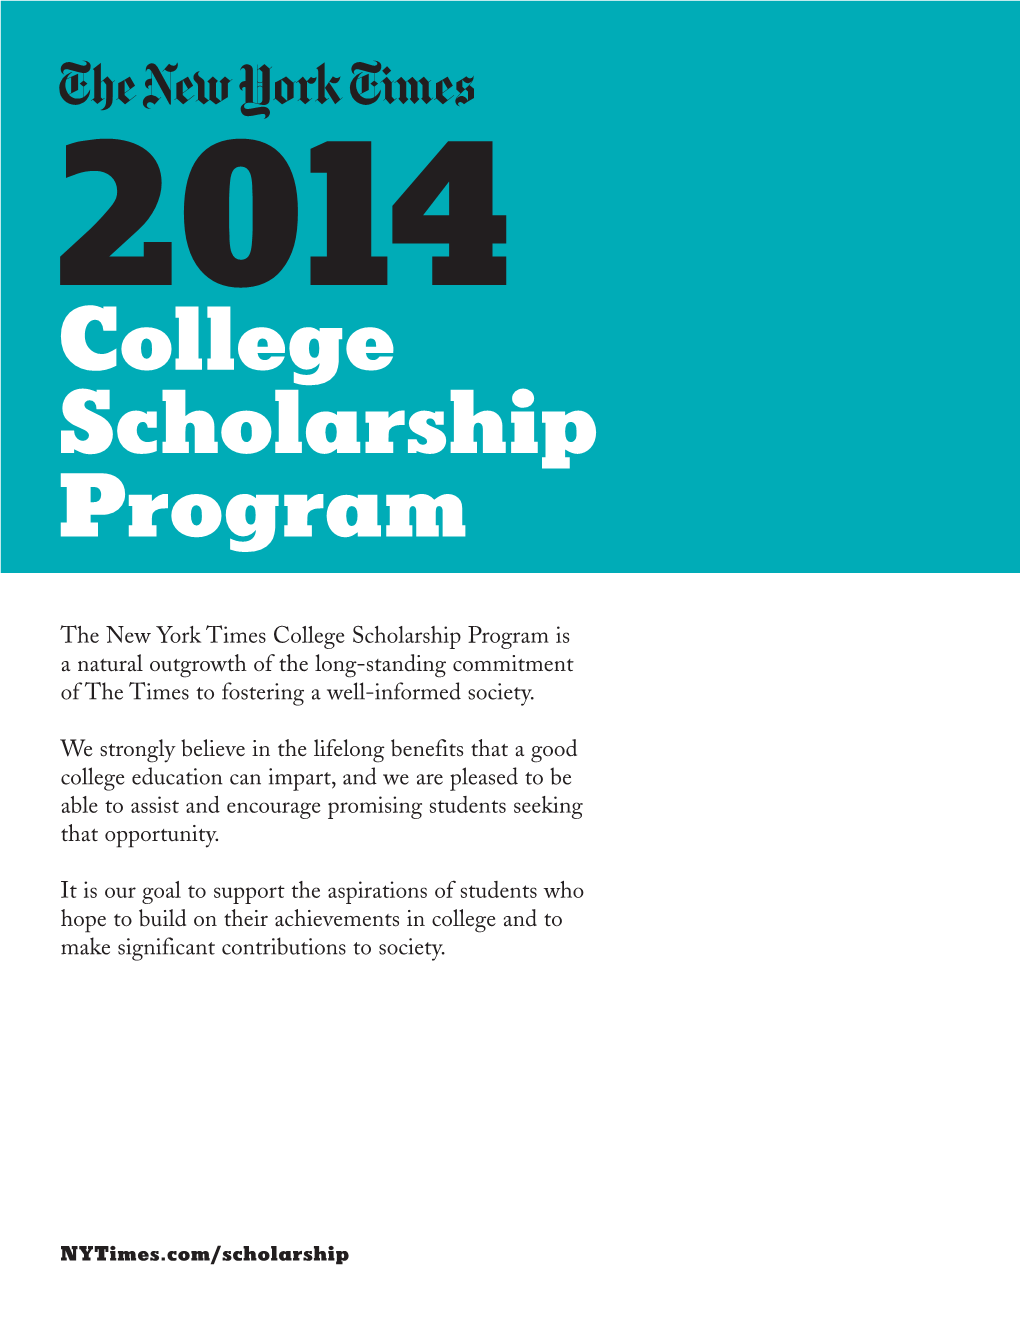 College Scholarship Program